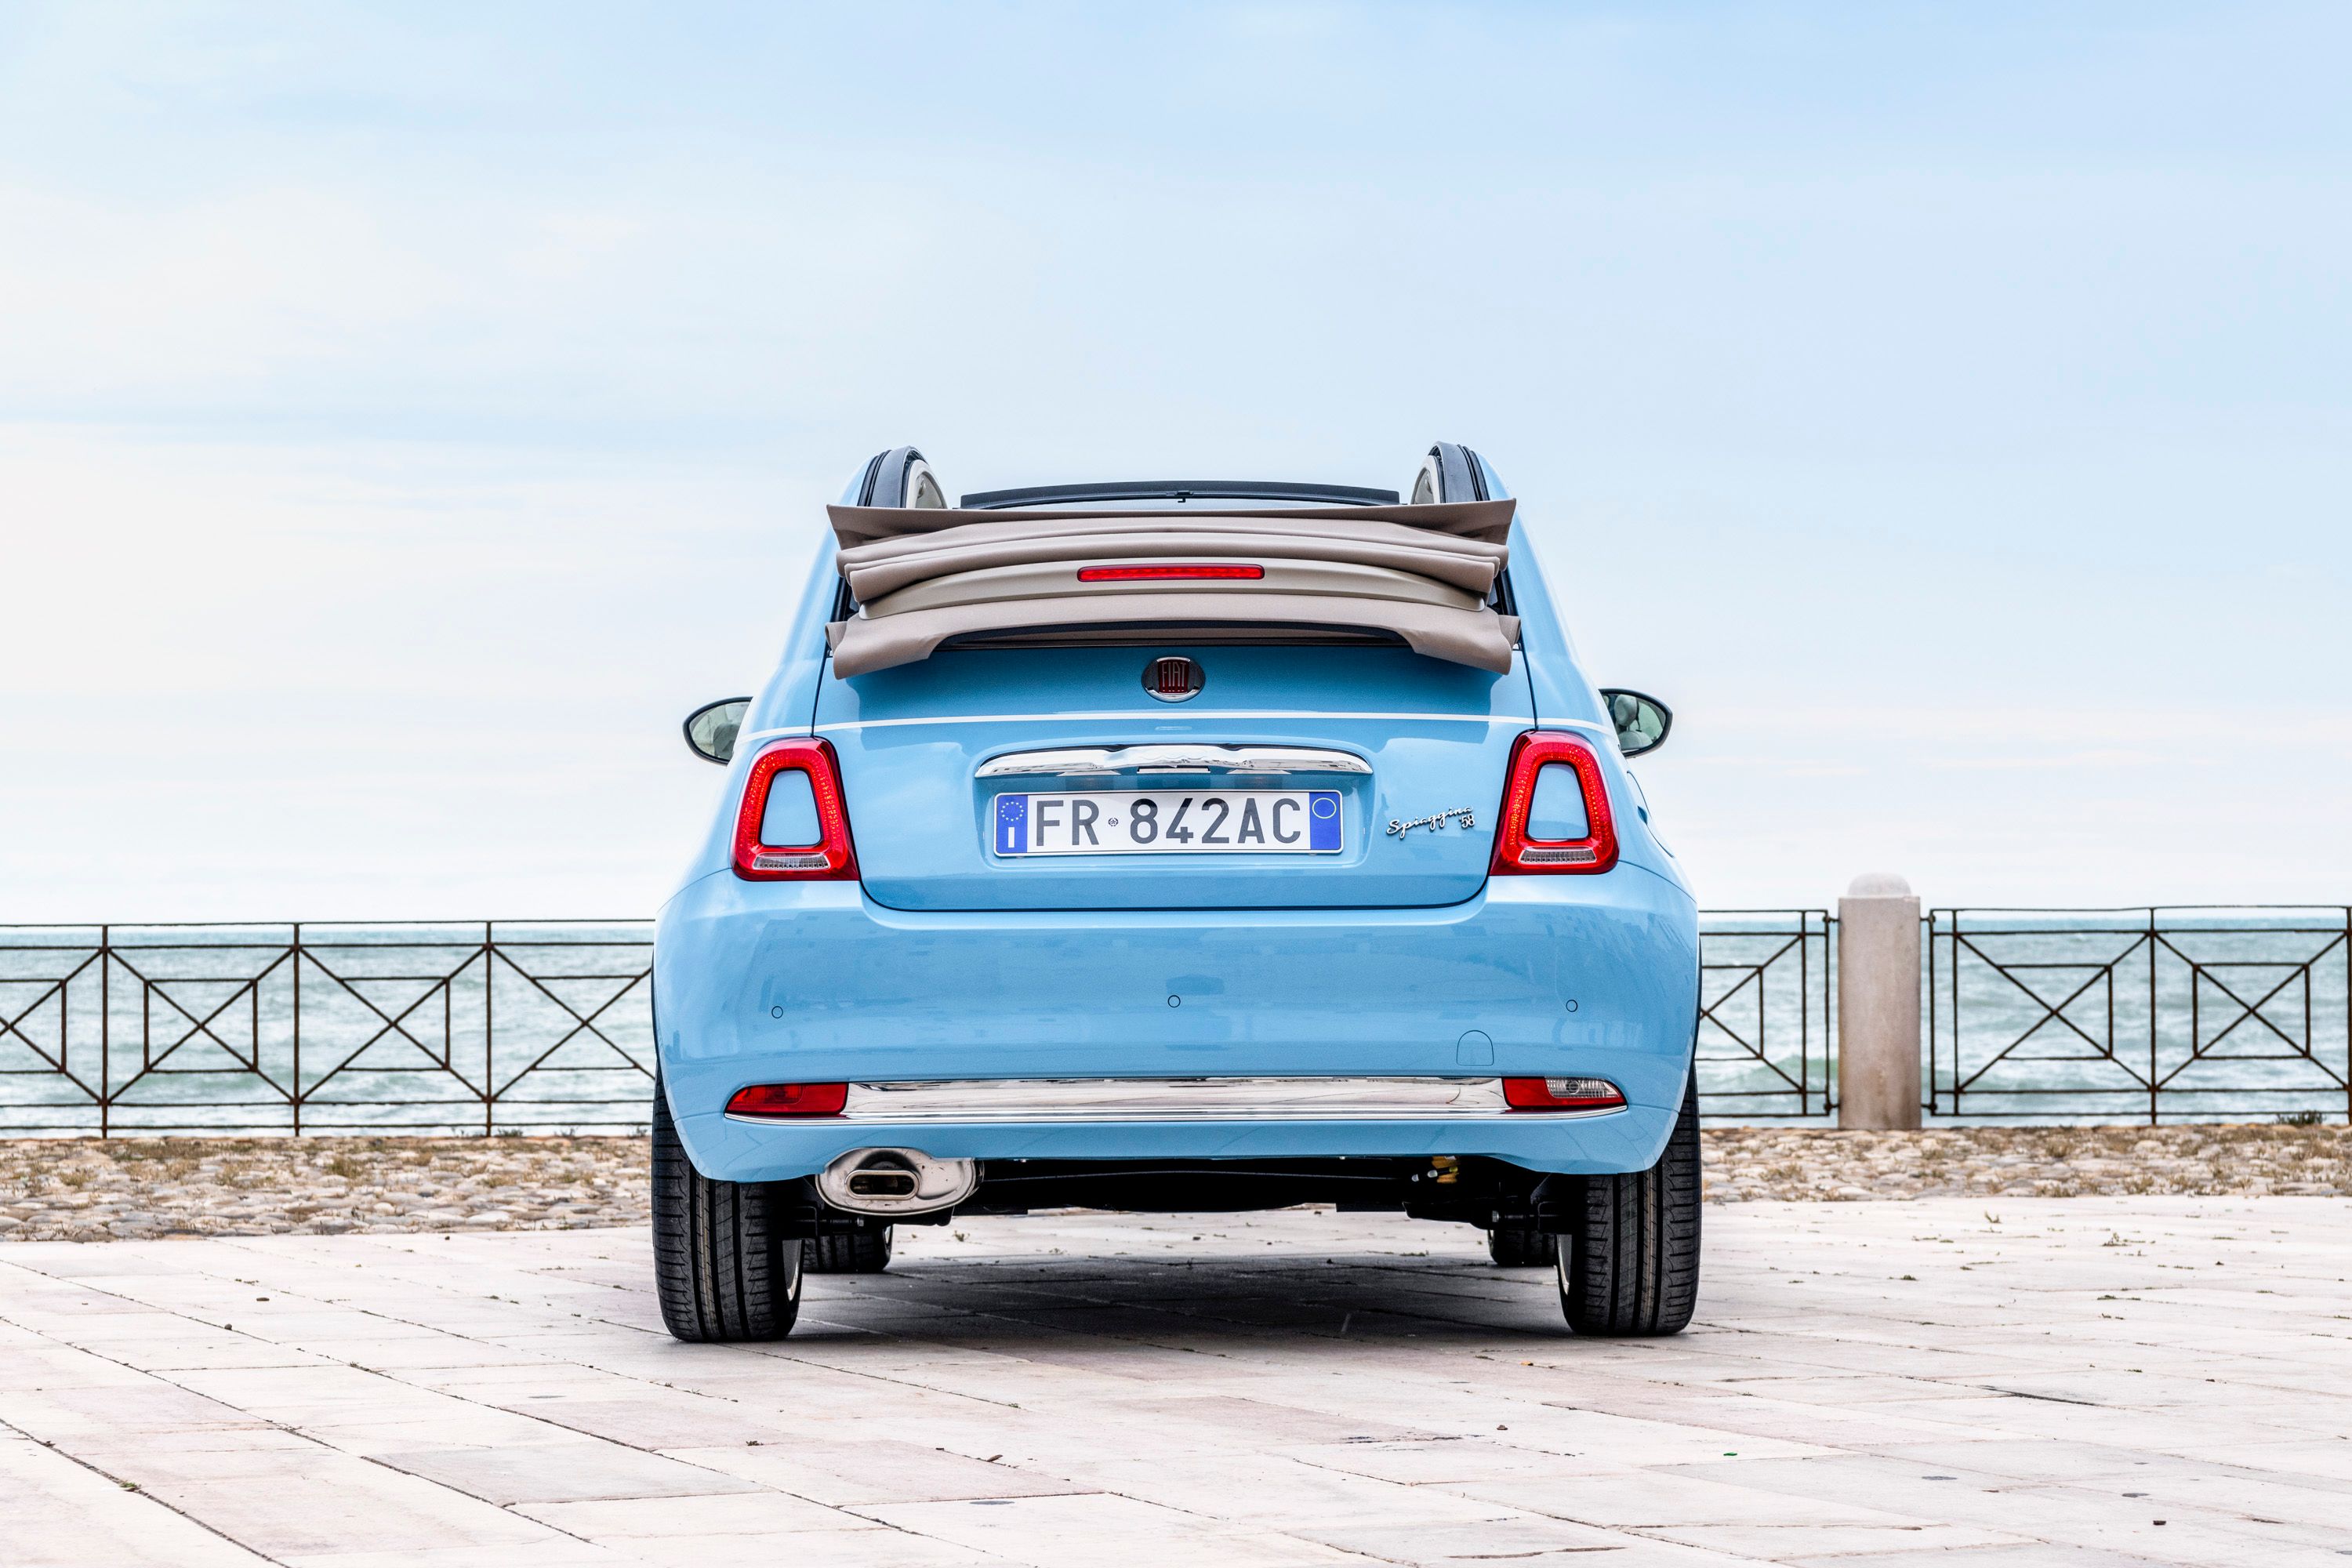 2018 Fiat 500 Spiaggina by Garage Italia and Pinninfarina